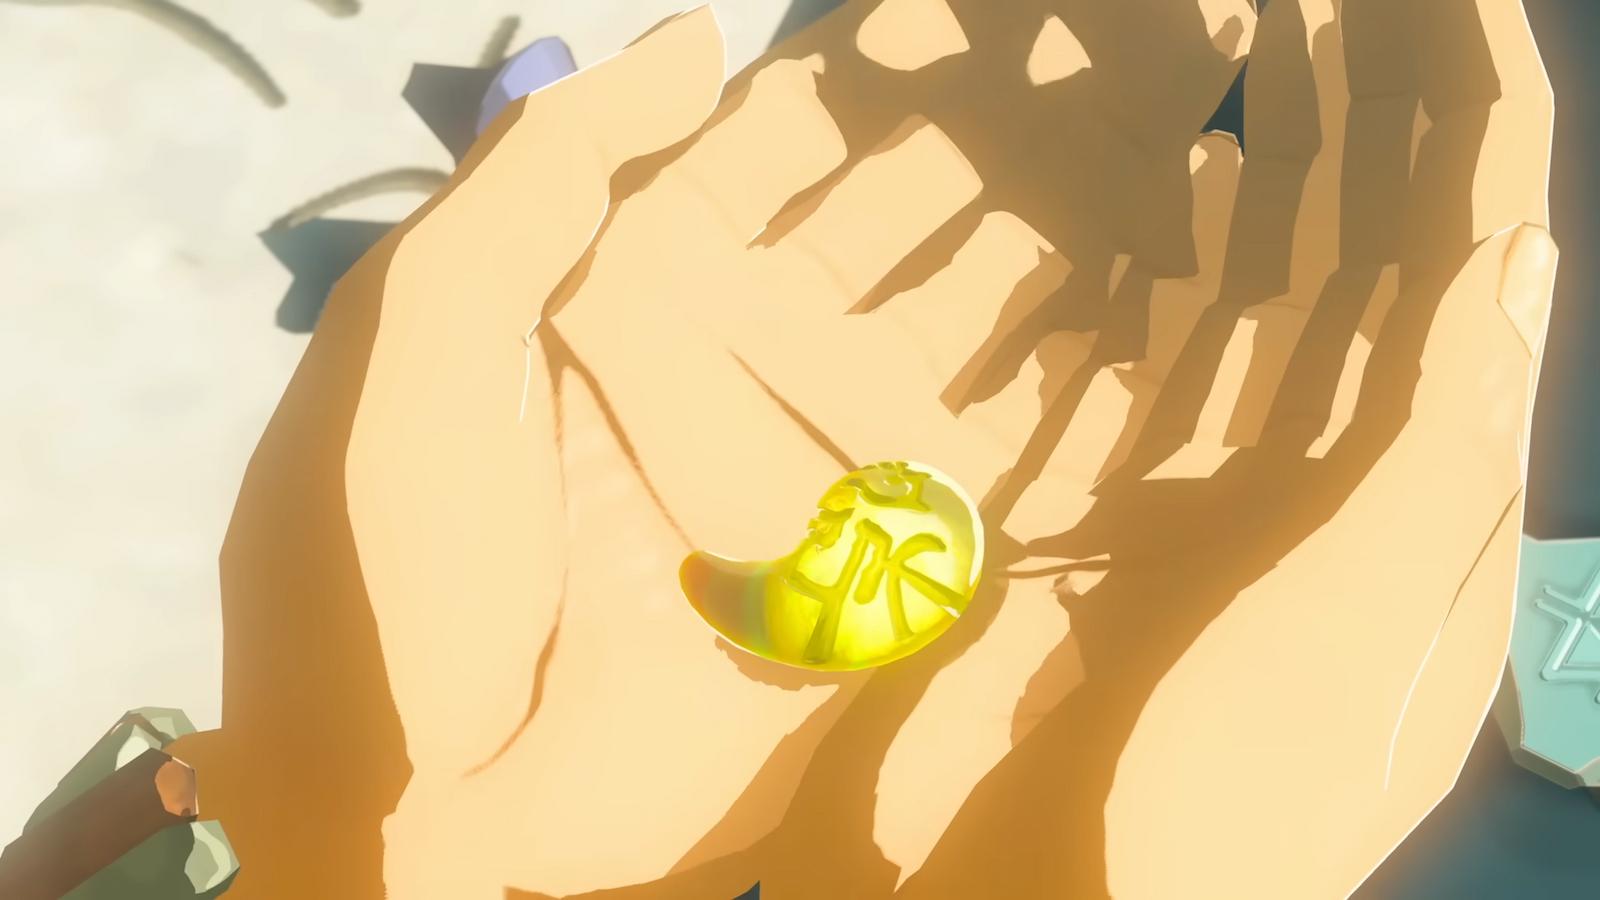 Zelda holding a tear from Tears of the Kingdom